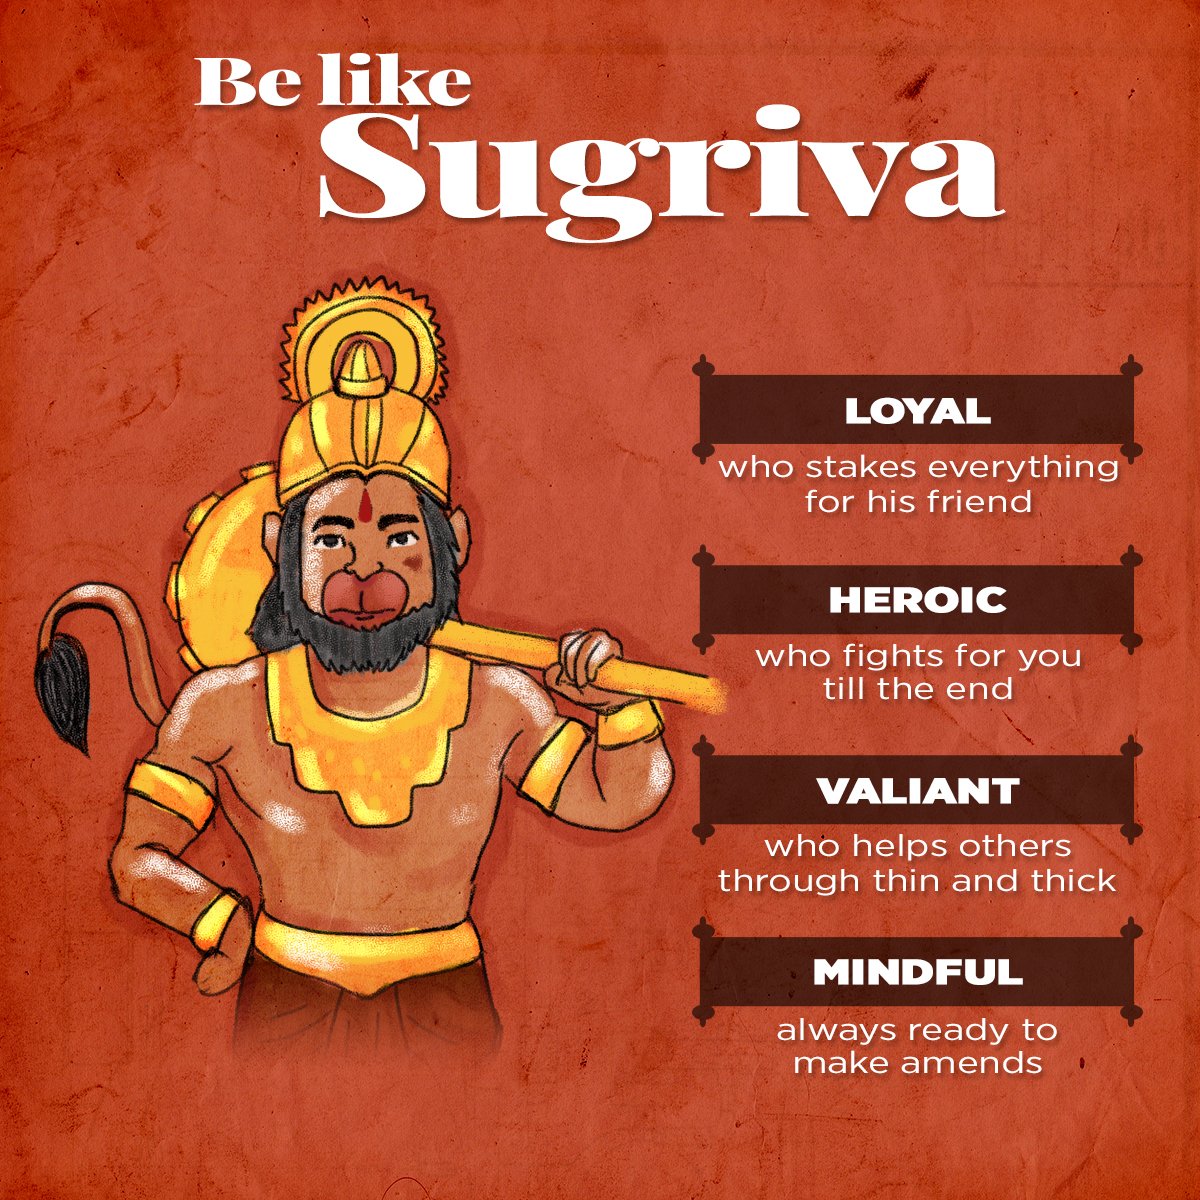 9. Be like Sugreev - loyal, heroic, valiant & mindful!  #LessonsFromRamayana  #JaiShriRam  #RamMandir